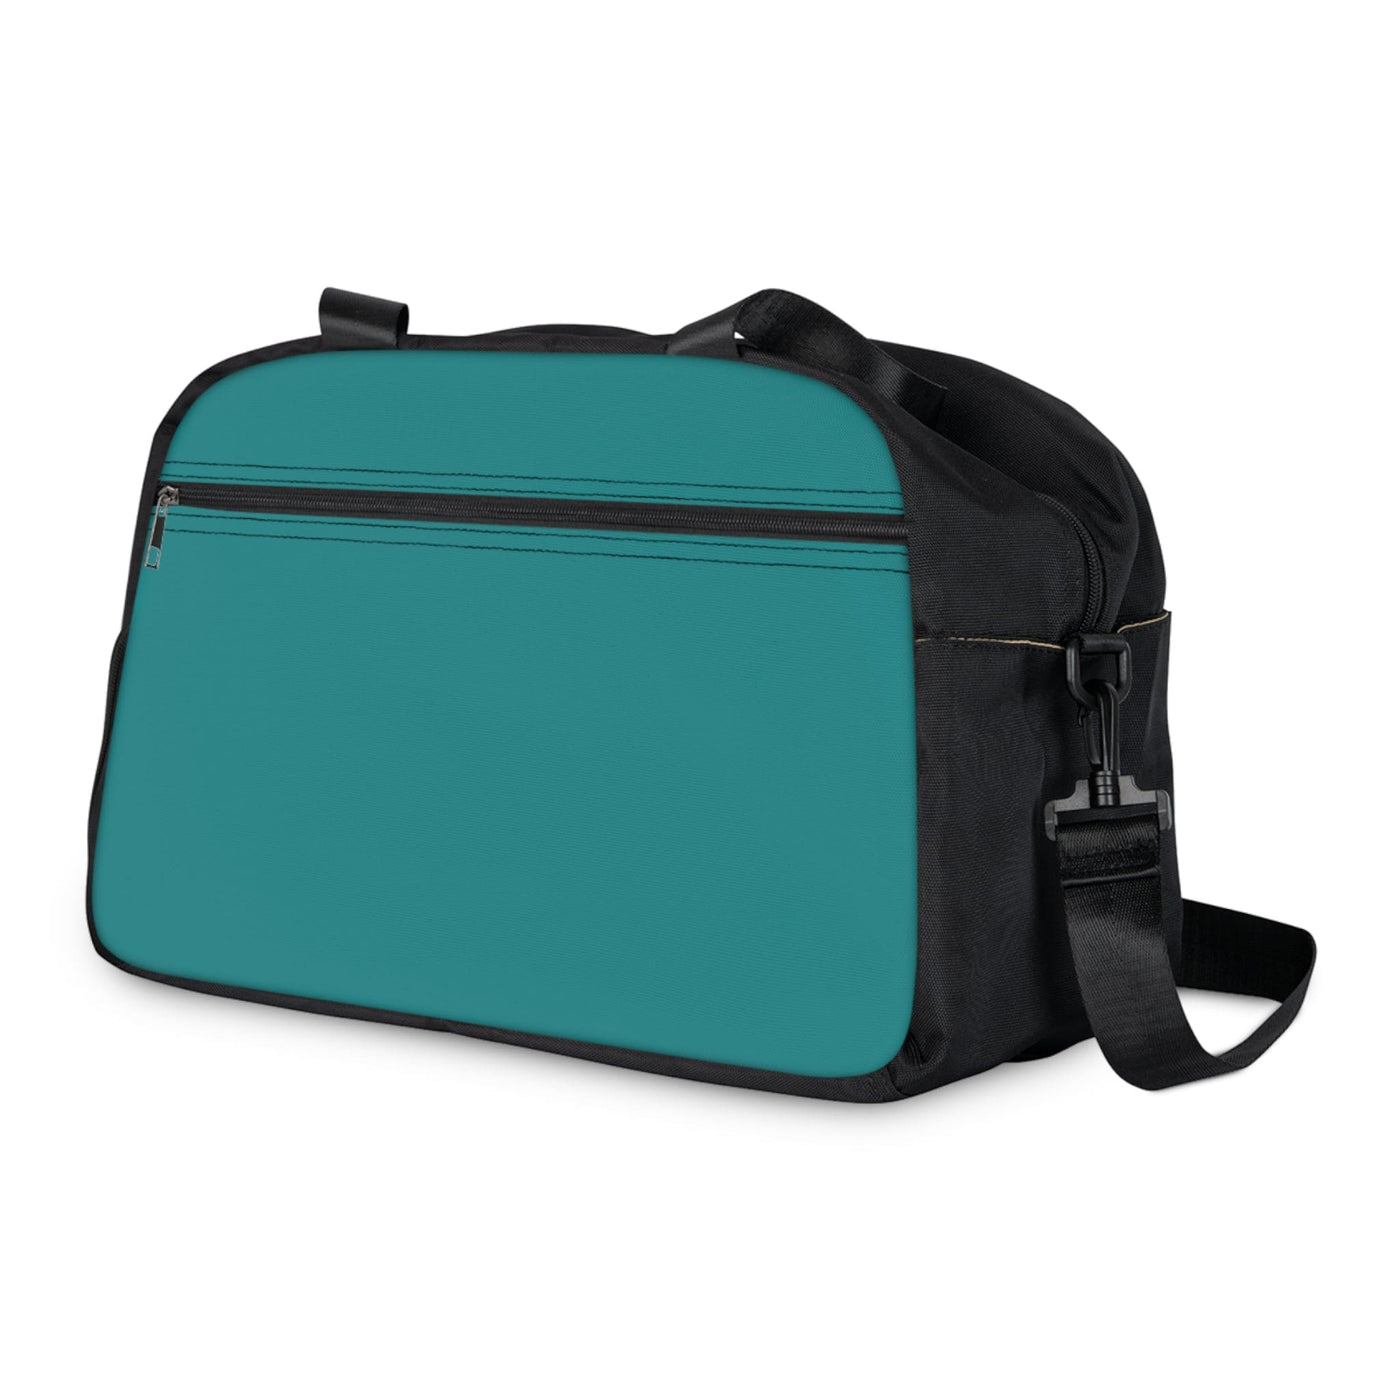 Travel Fitness Bag Dark Teal Green - Bags